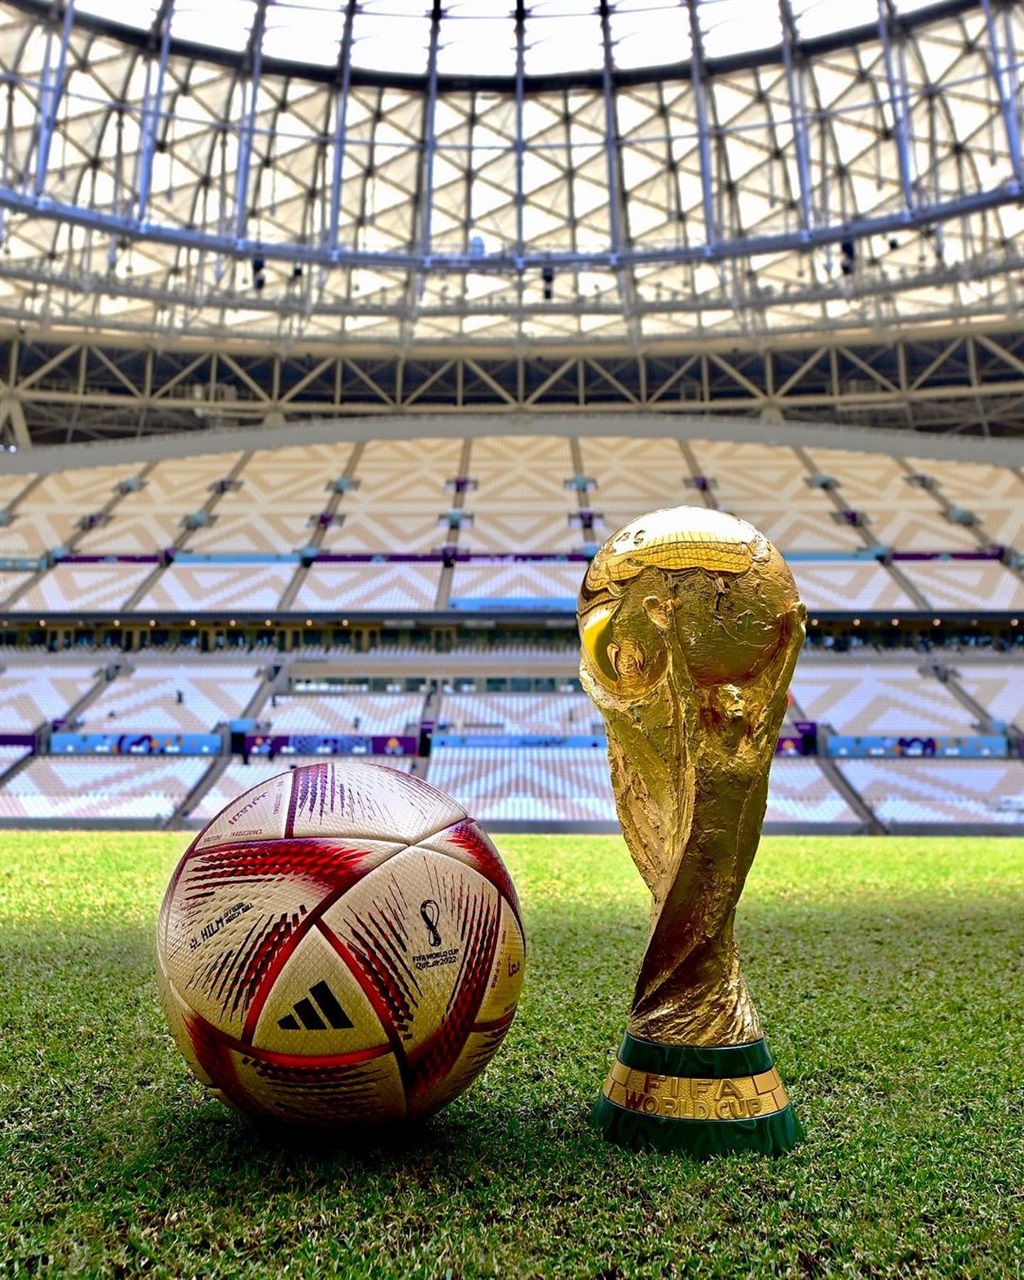 The adidas "Al Hilm" FIFA World Cup Finals Match ball.